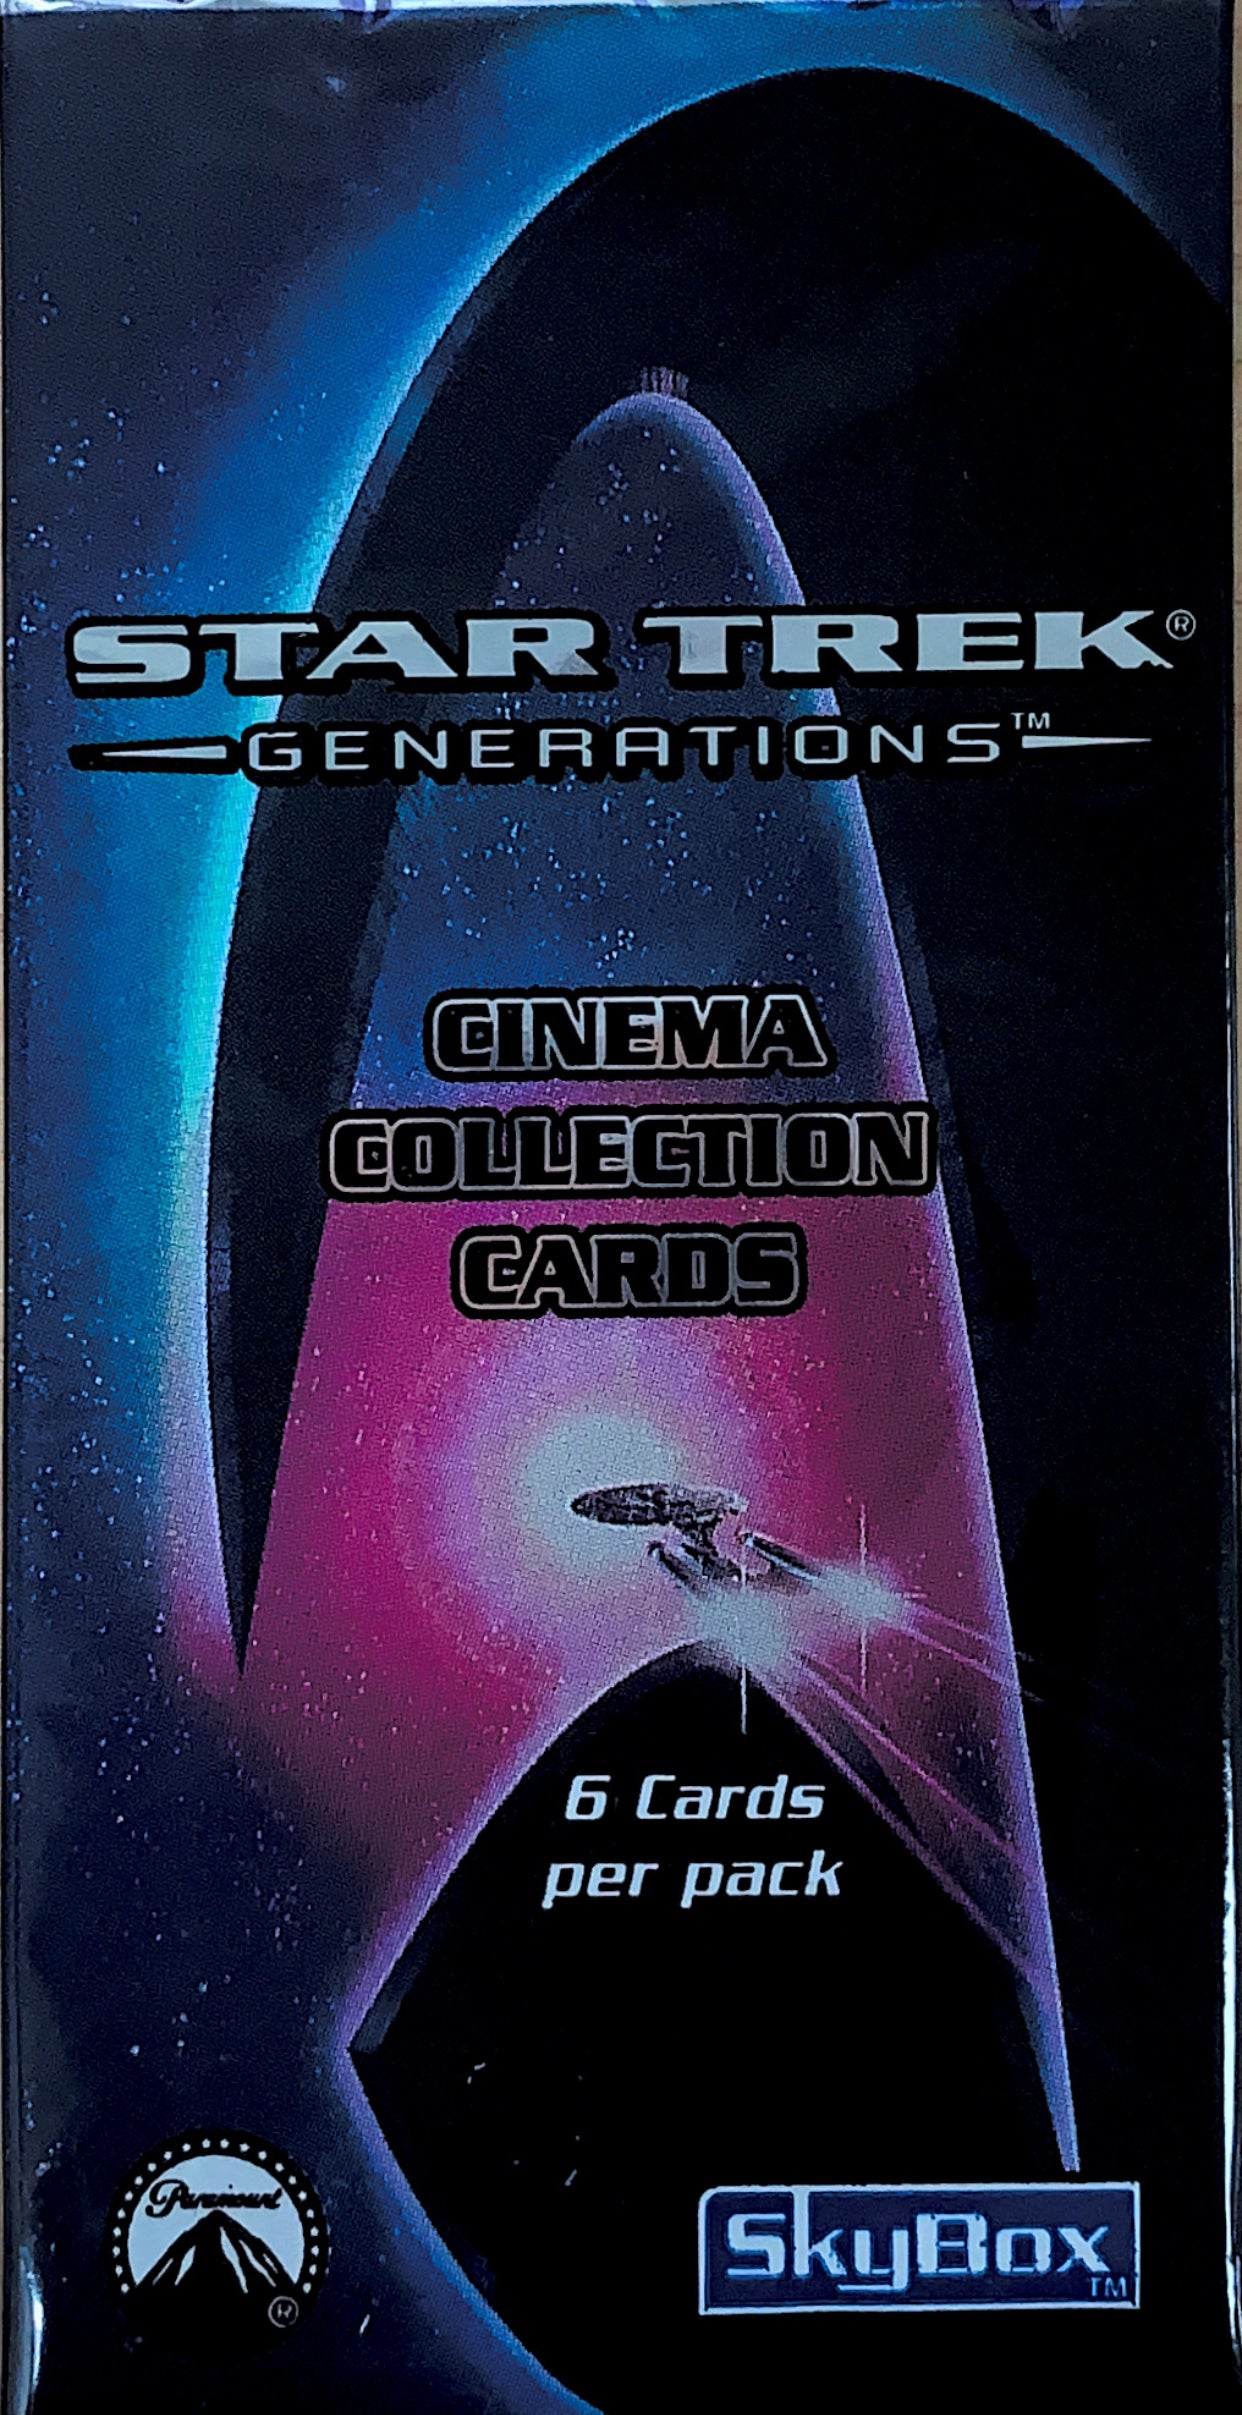 1994 Star Trek Generations Cinema Collection Cards